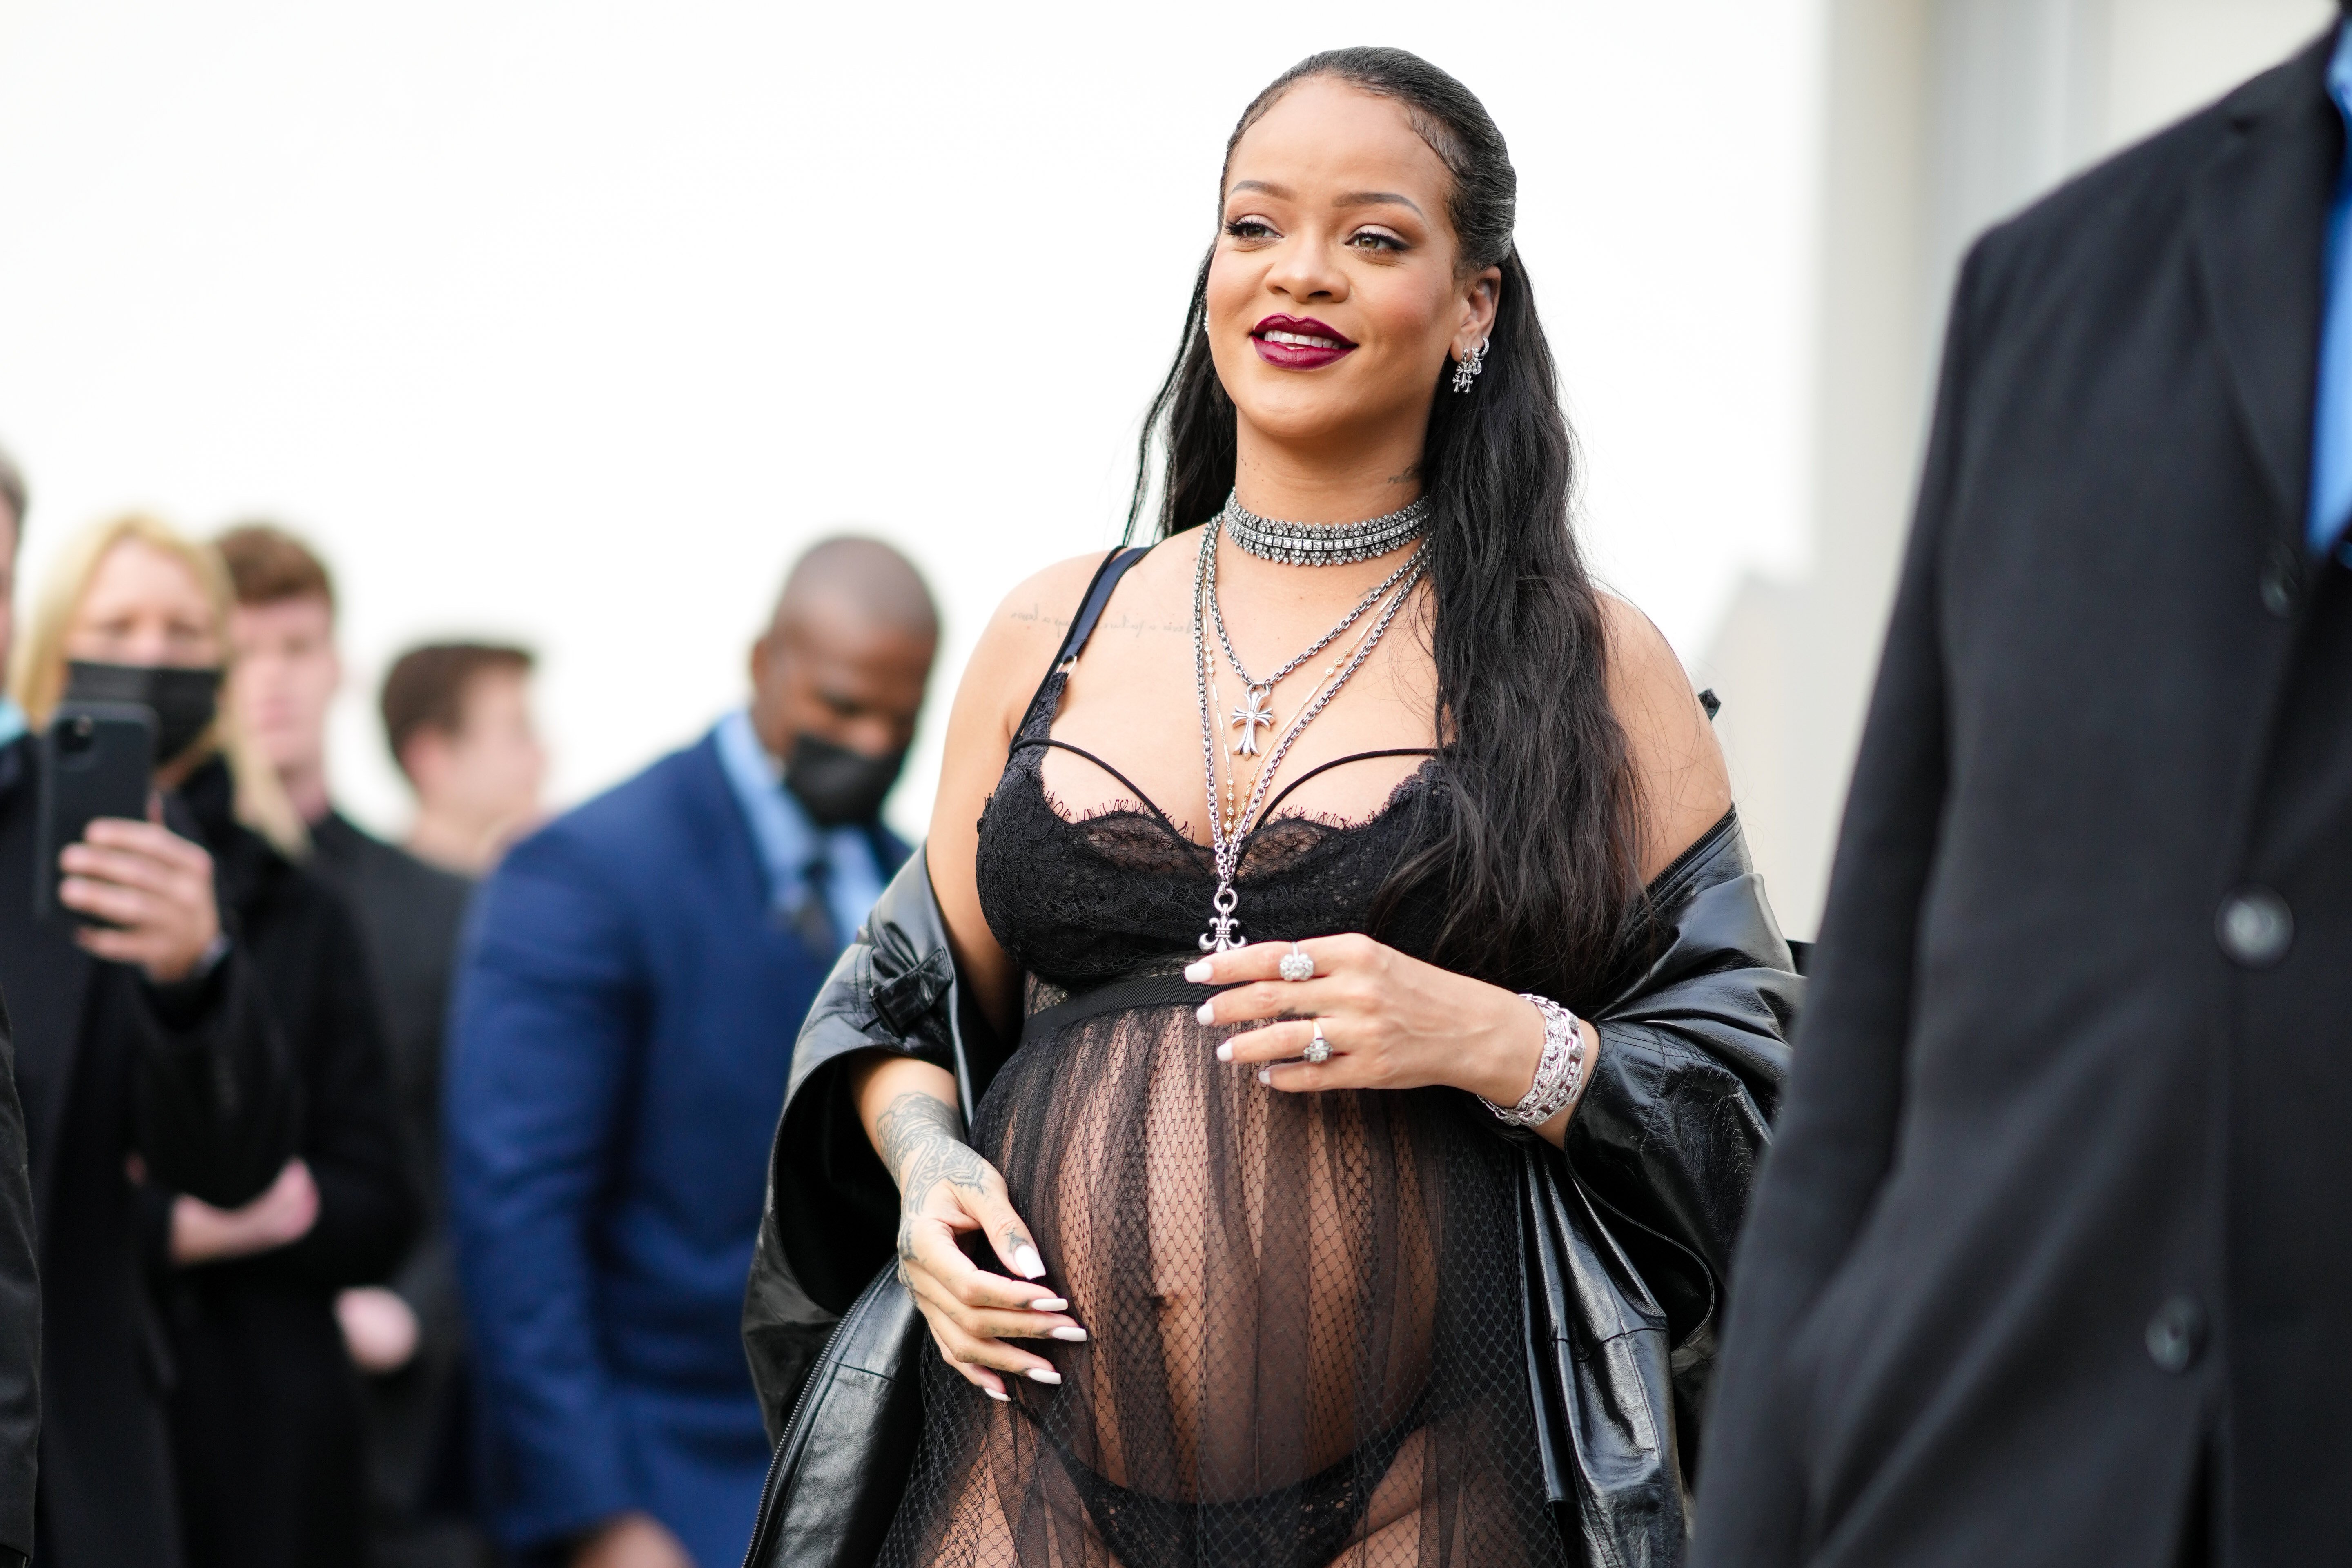 JW's career Rihanna gets a real BUMP from - PressReader